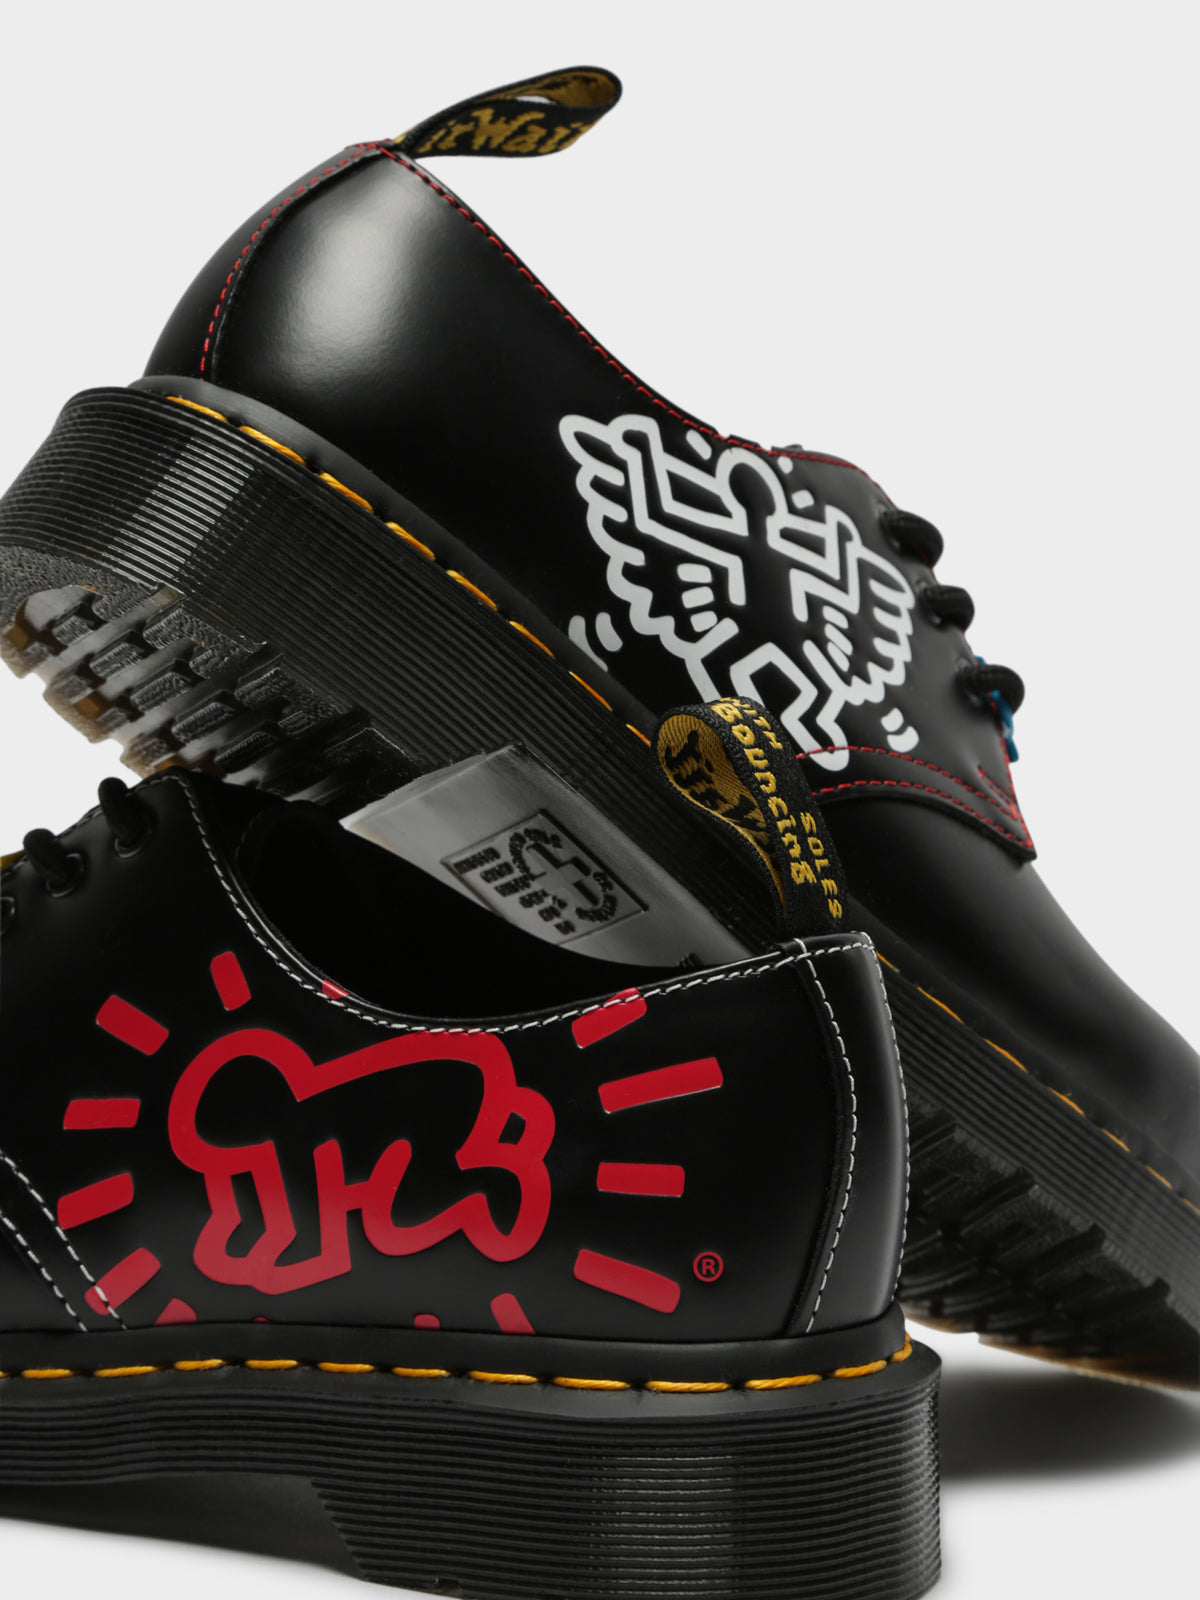 Unisex 1461 Keith Haring Dress Shoe in Black